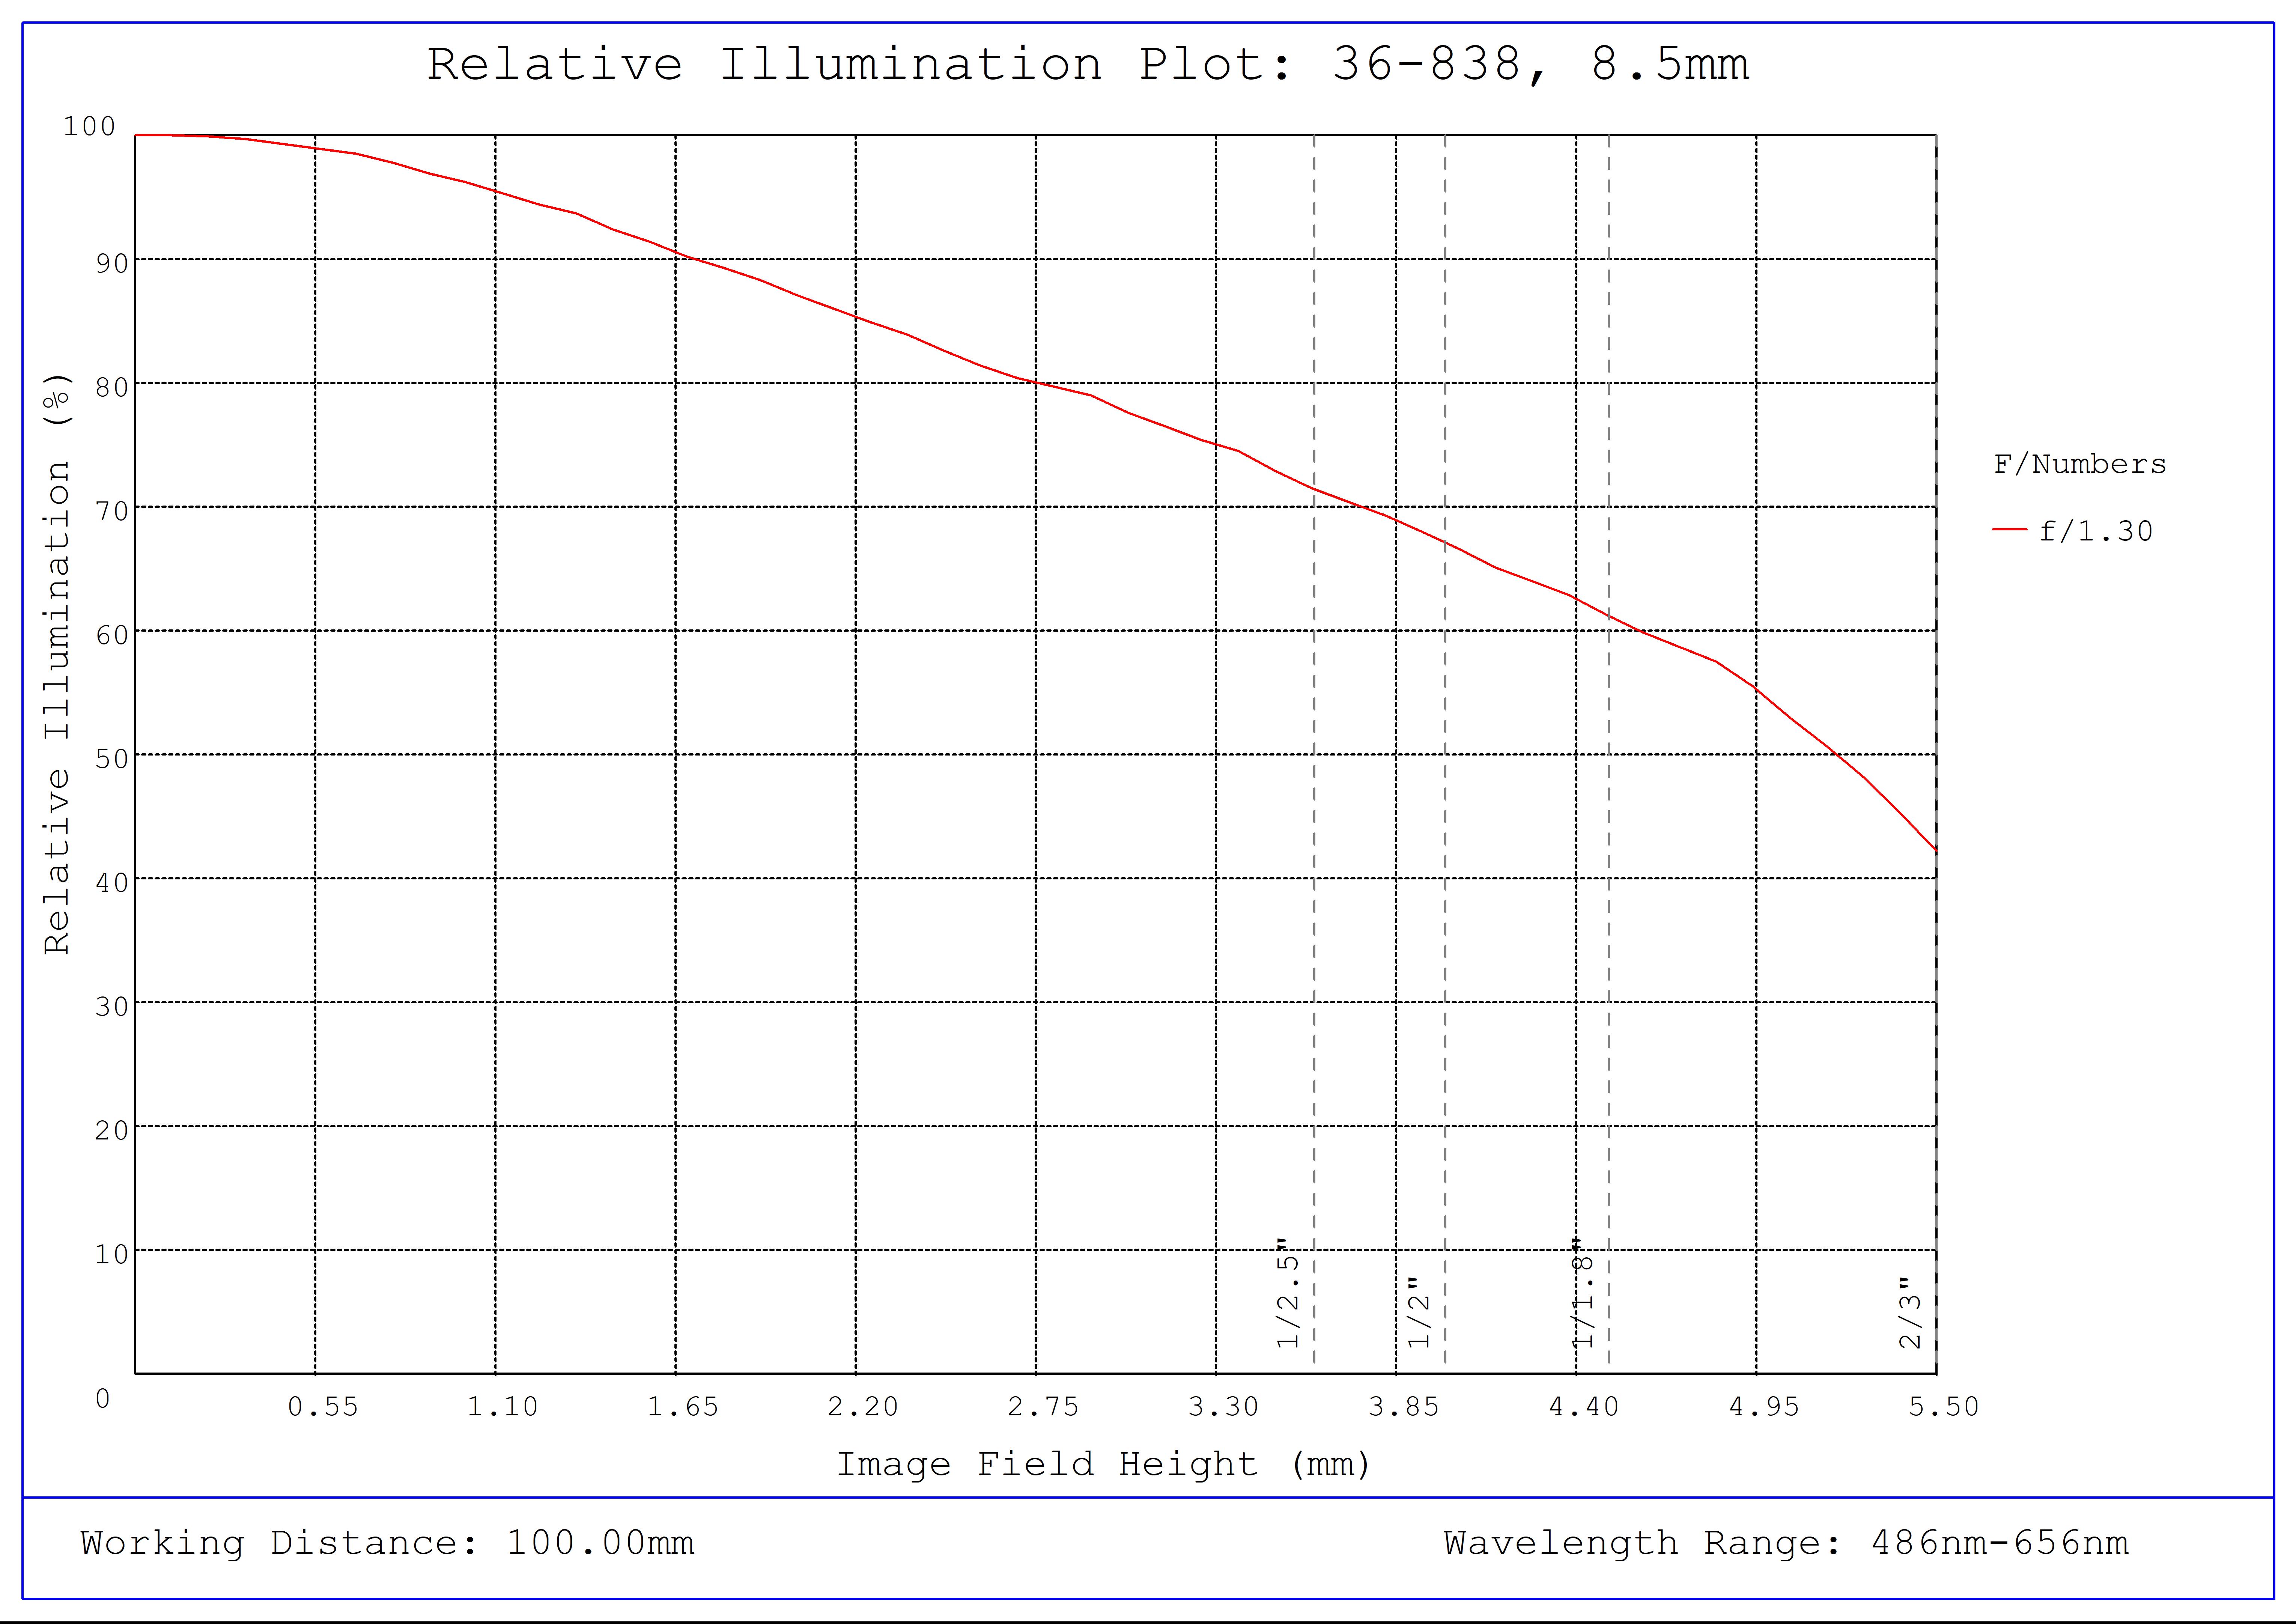 #36-838, 8.5mm, f/1.3 Cr Series Fixed Focal Length Lens, Relative Illumination Plot